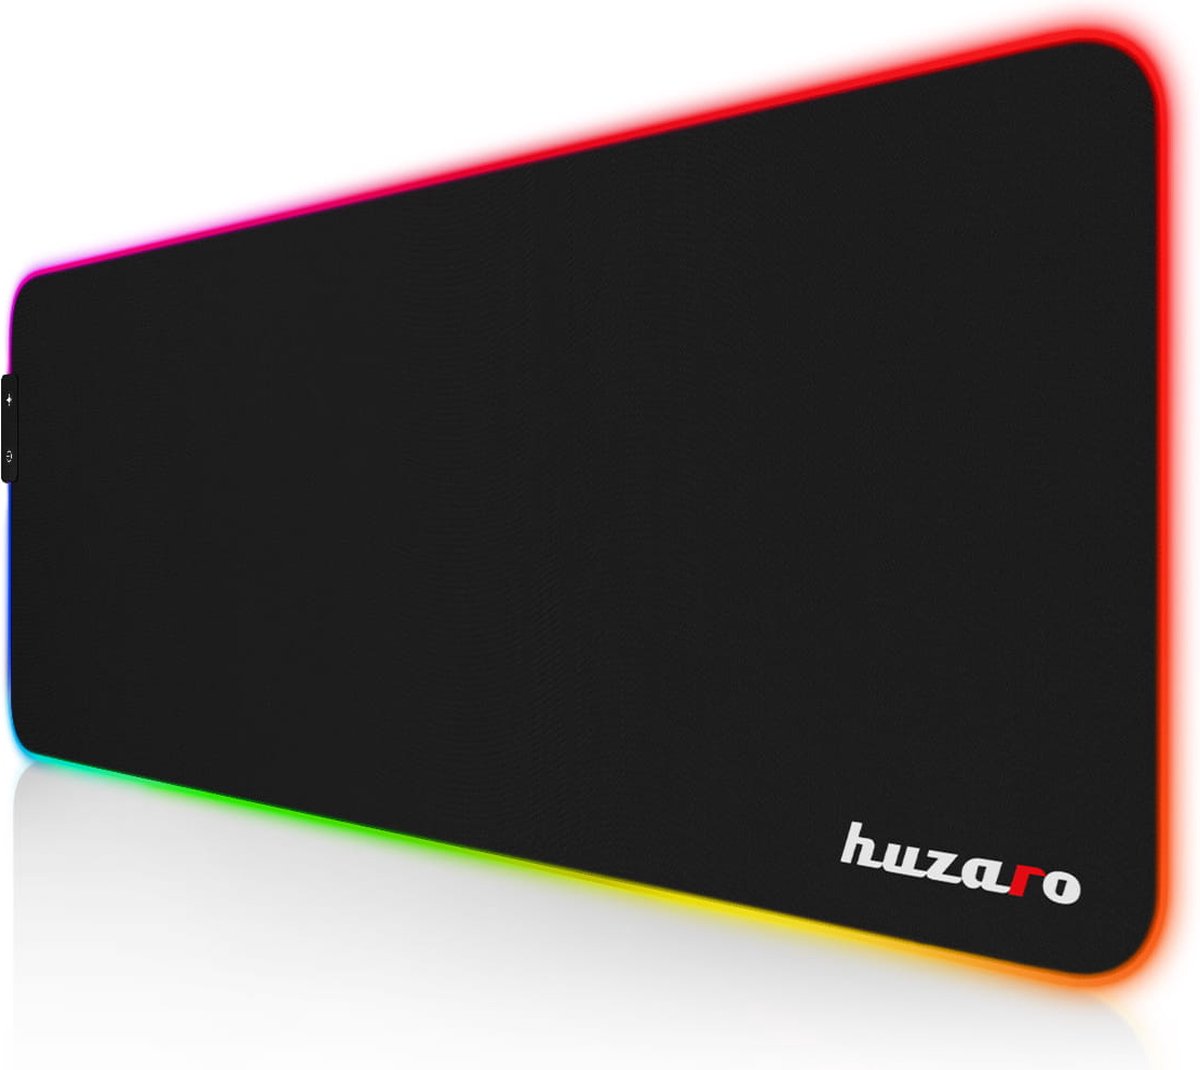 Huzaro - 1.0 XL RGB - Muismat